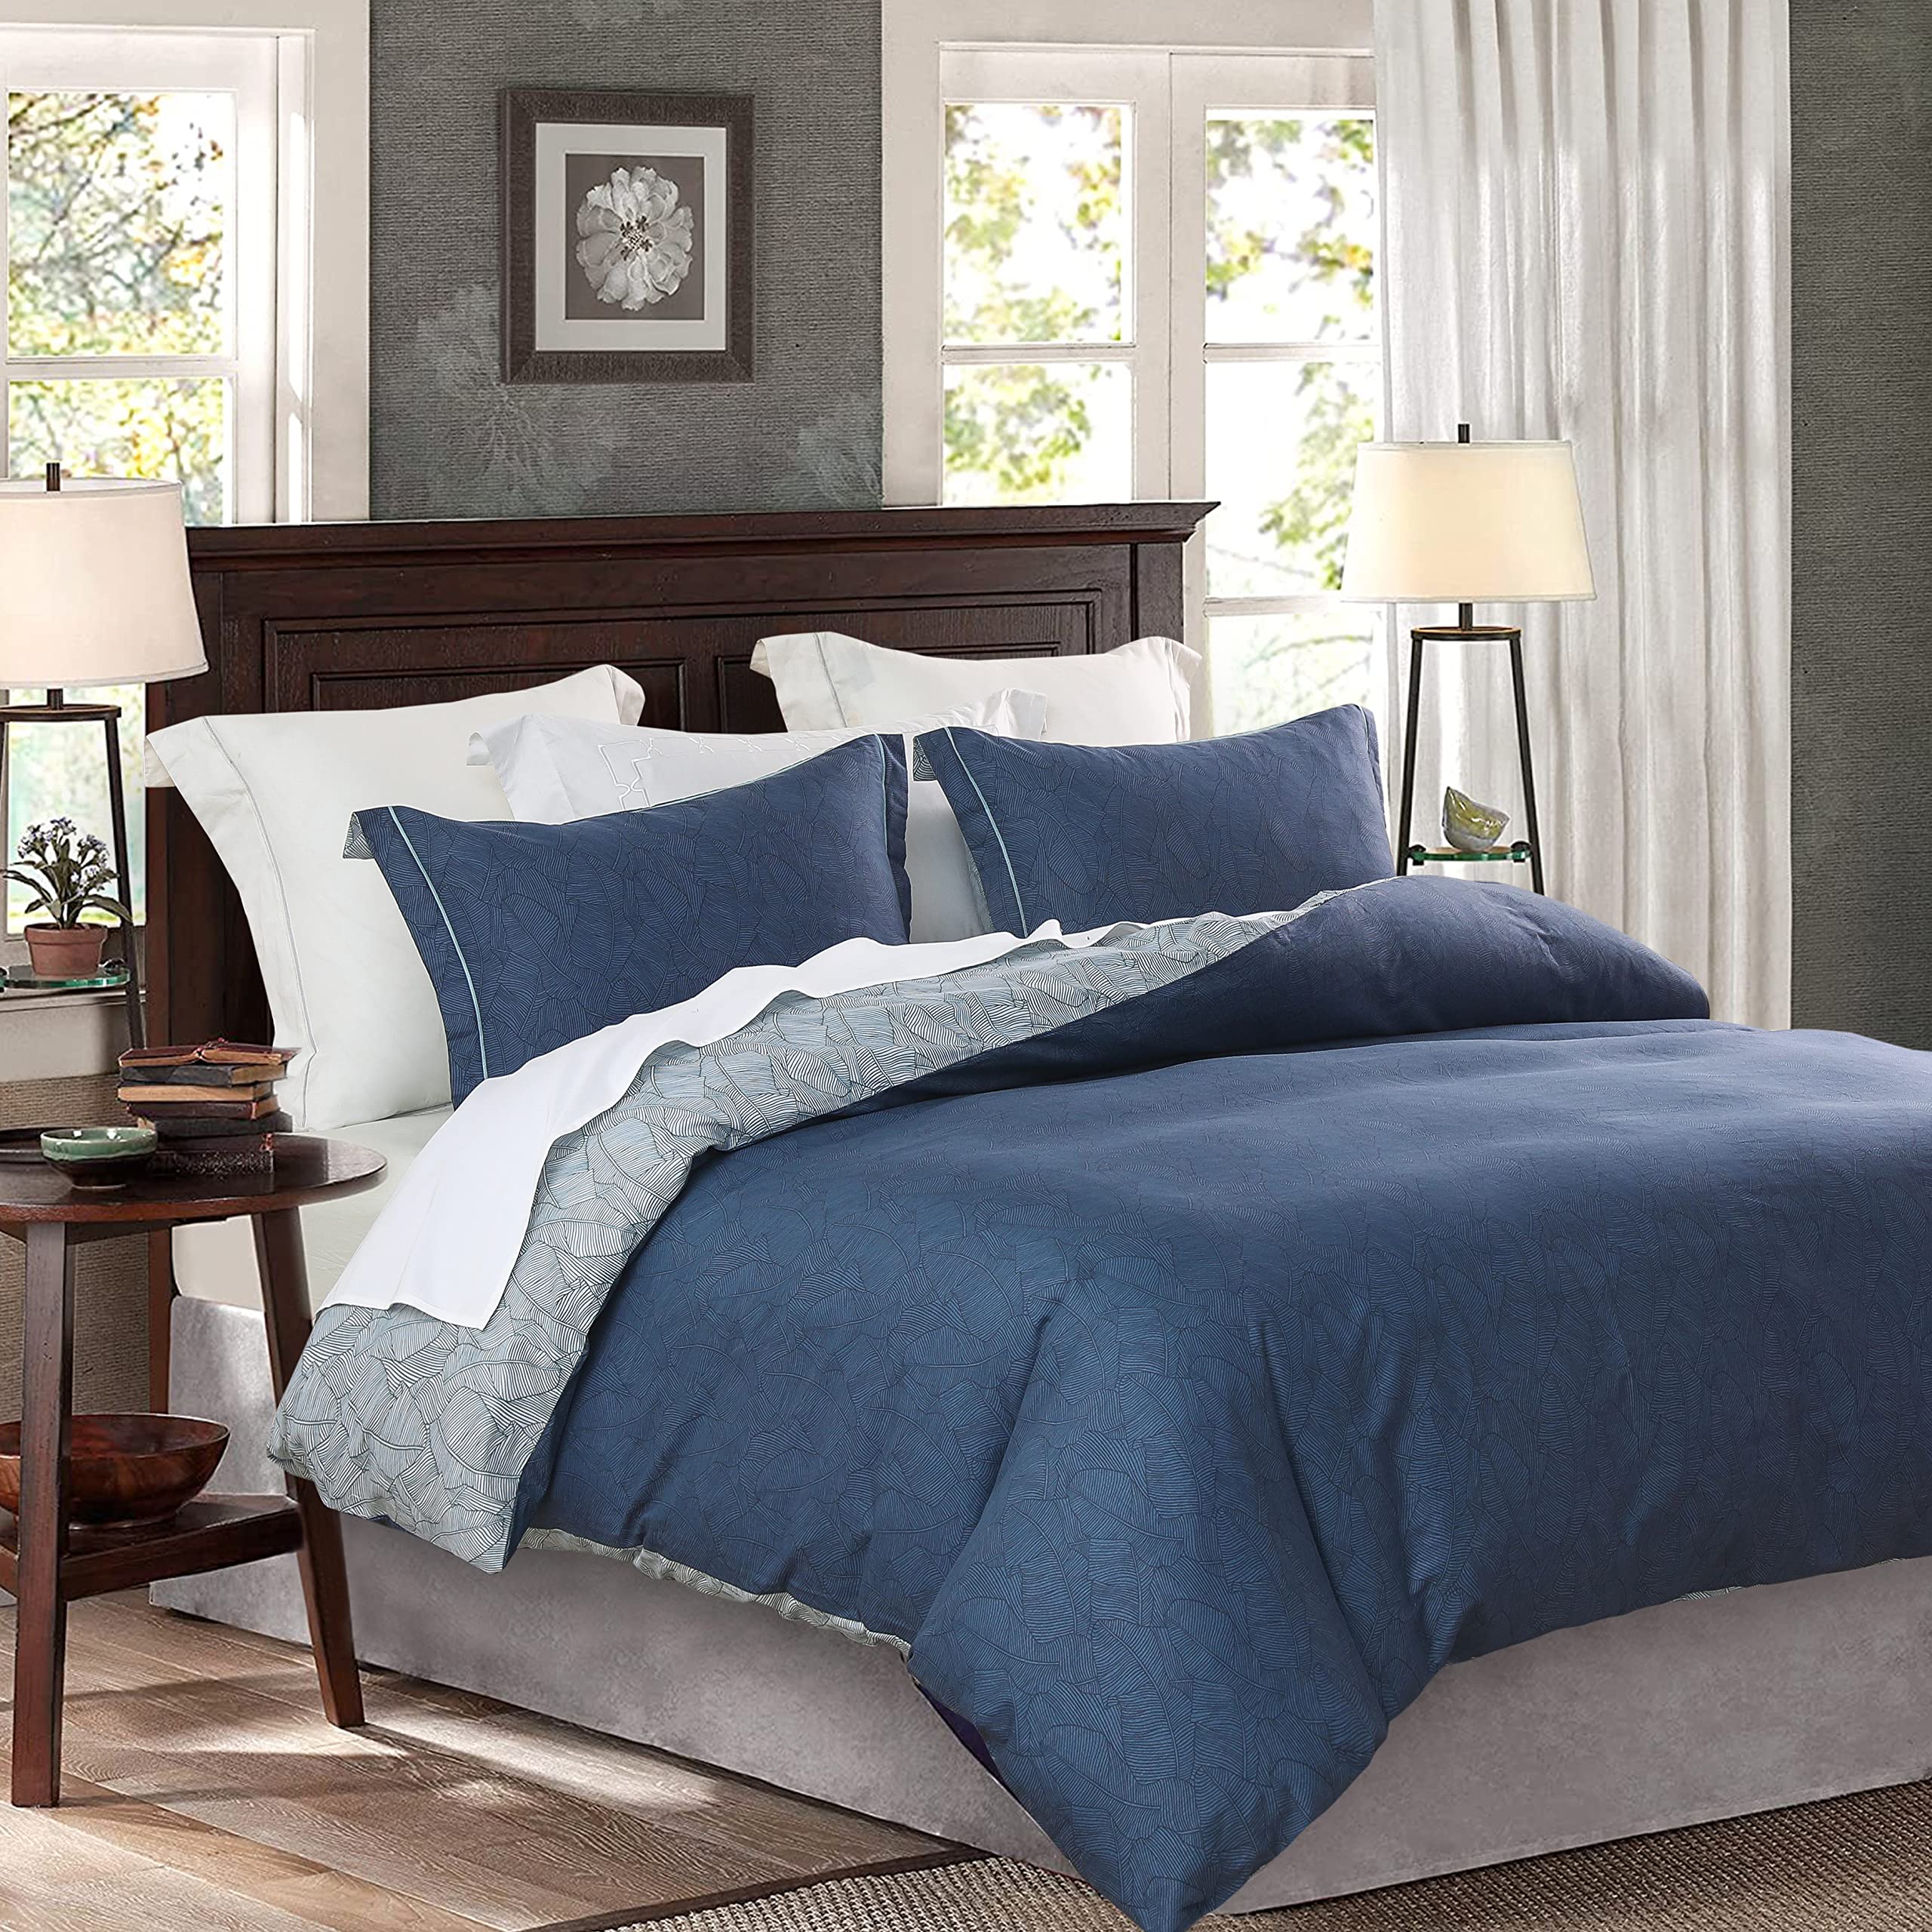 SLEEPBELLA Comforter King Size, 600 Thread Count Cotton Navy & Grey Leaves Reveisible Comforter Sets, Down Alternative Bedding S